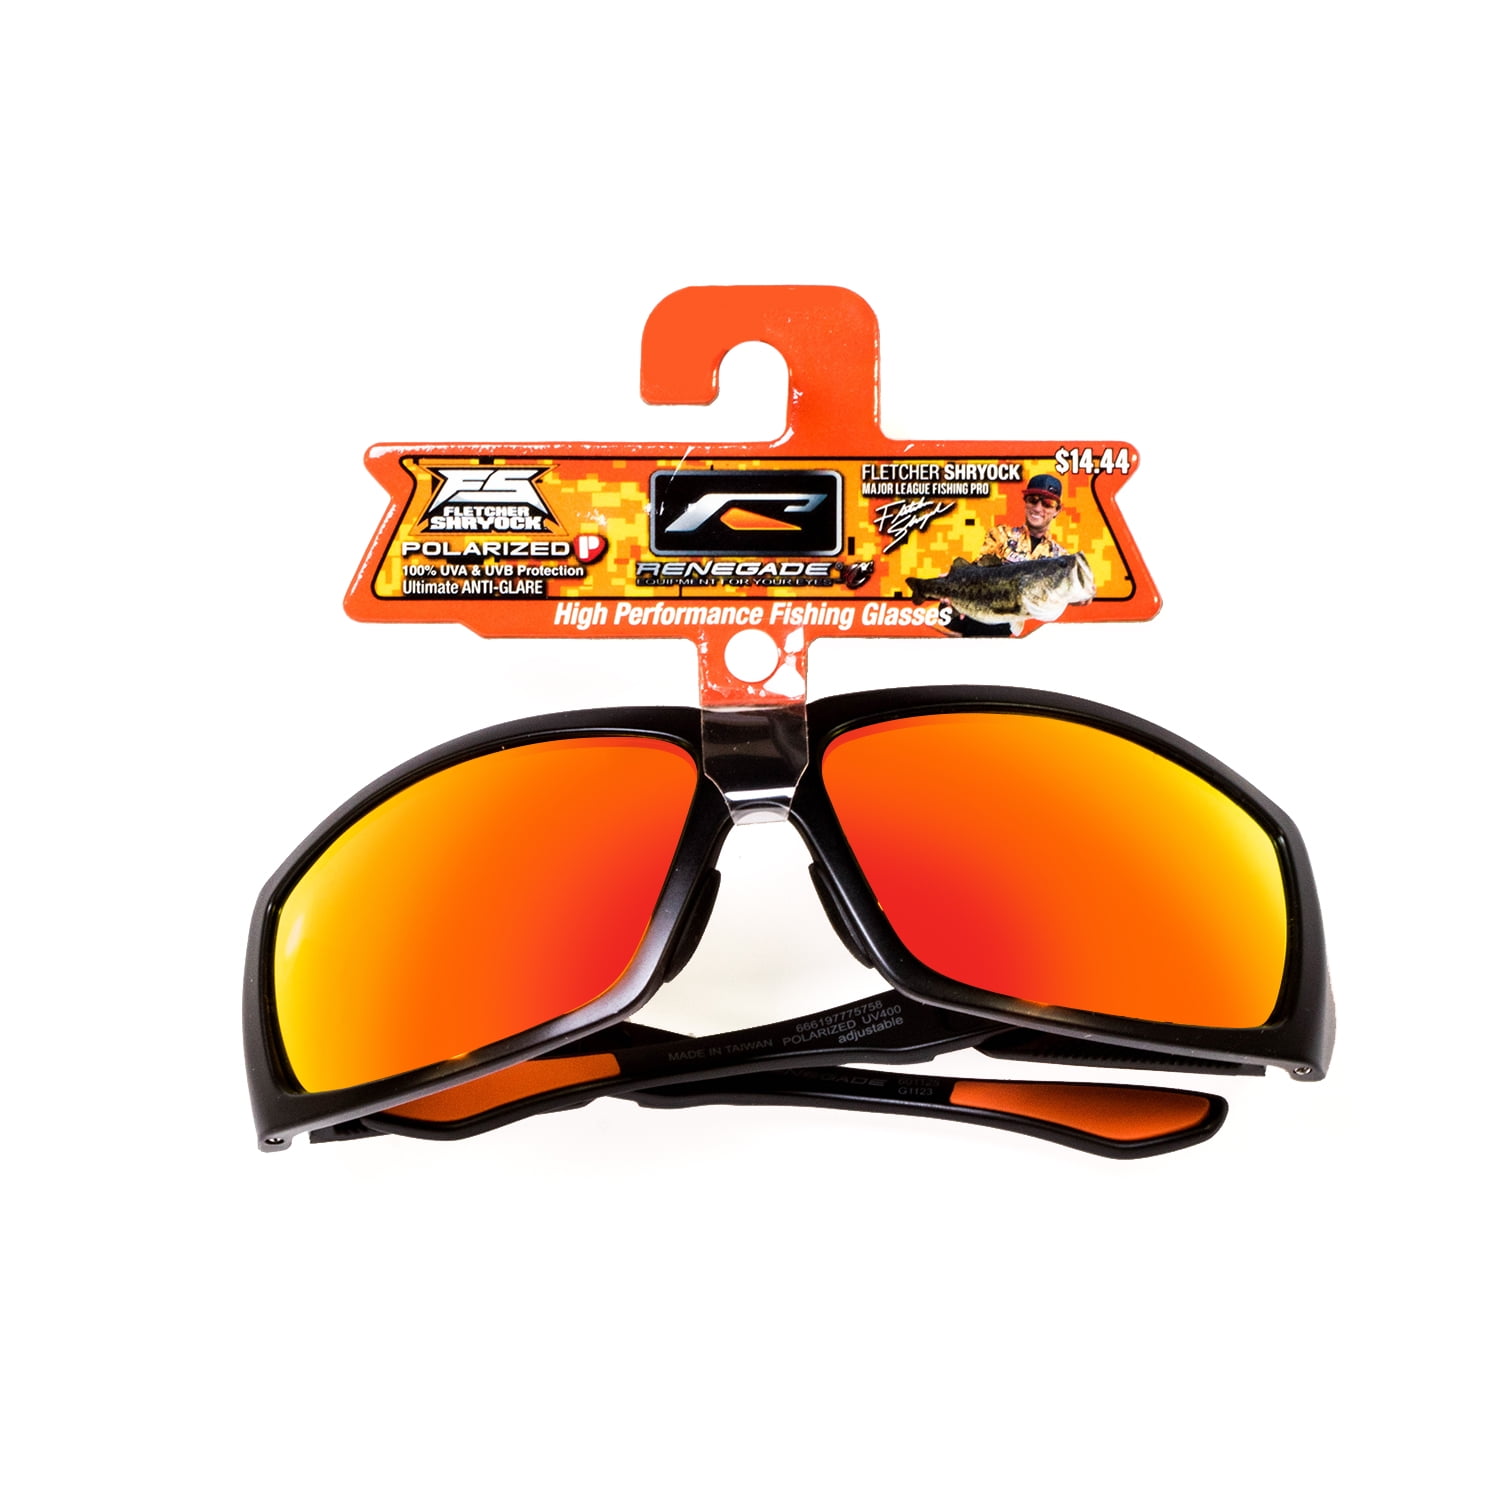 Update 252+ professional sunglasses latest